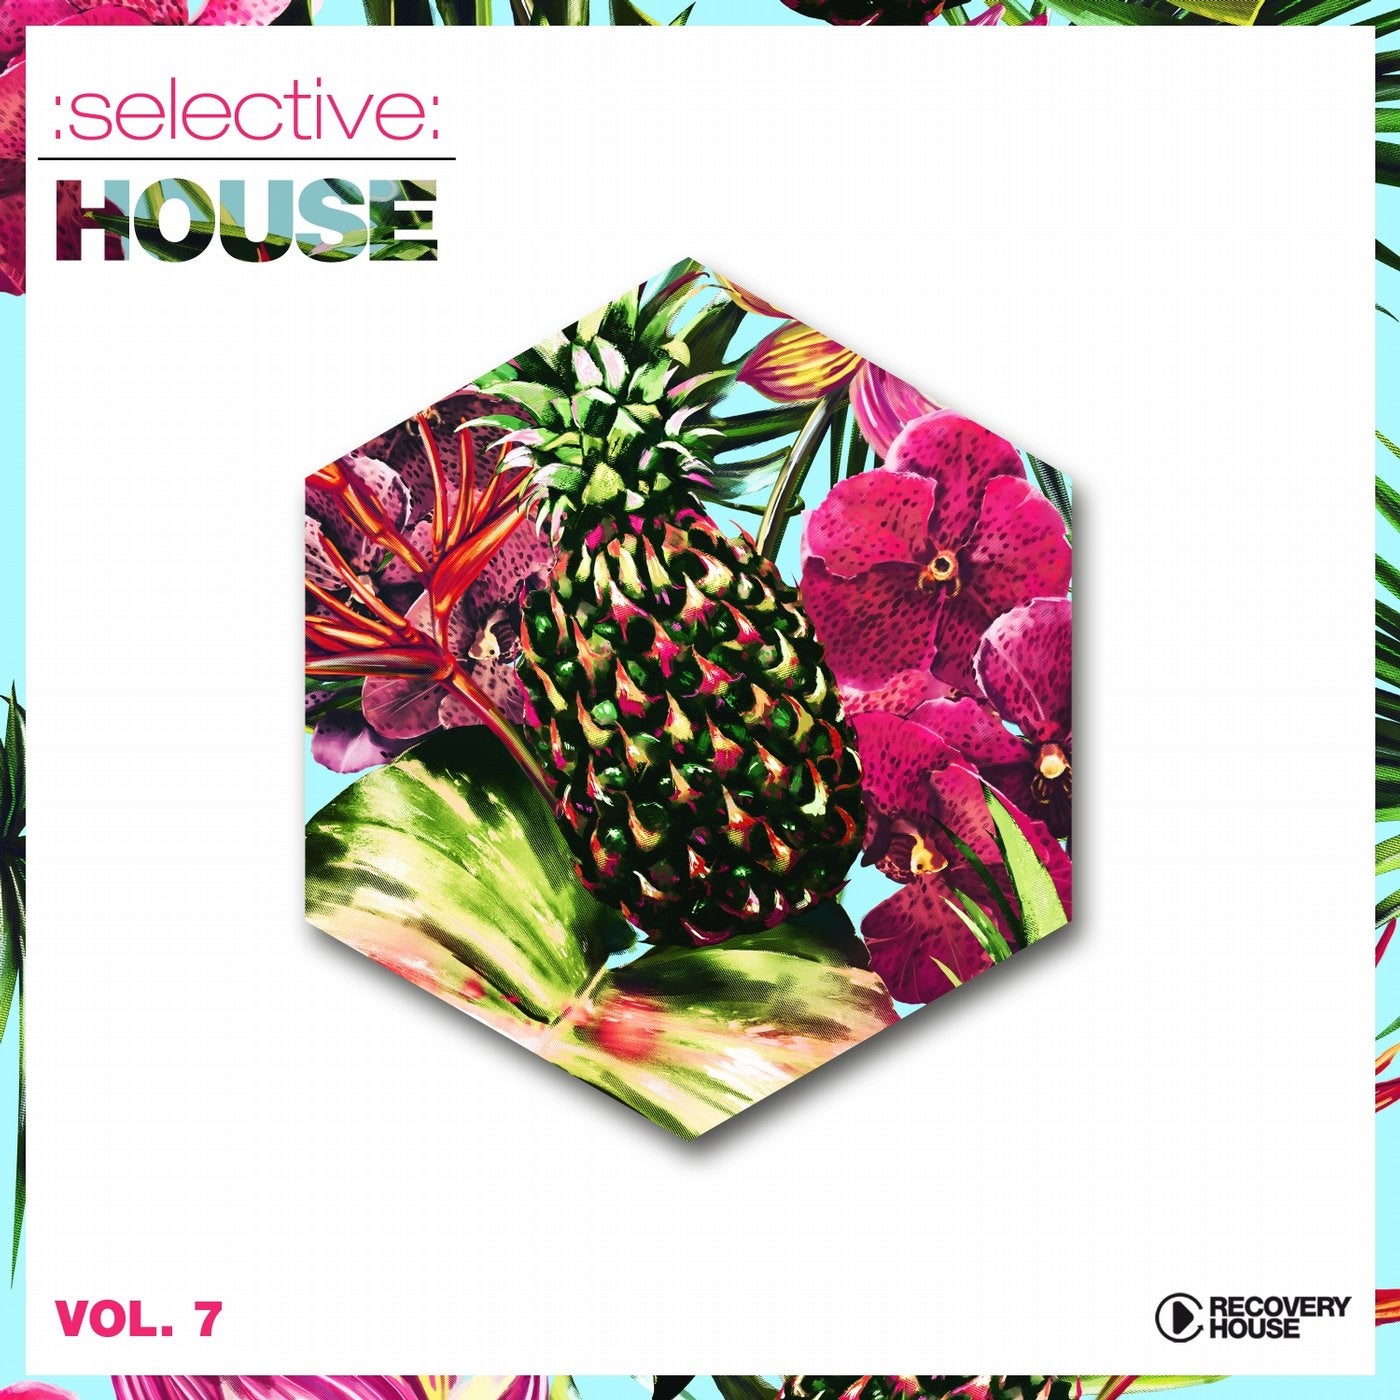 Selective: House Vol. 7